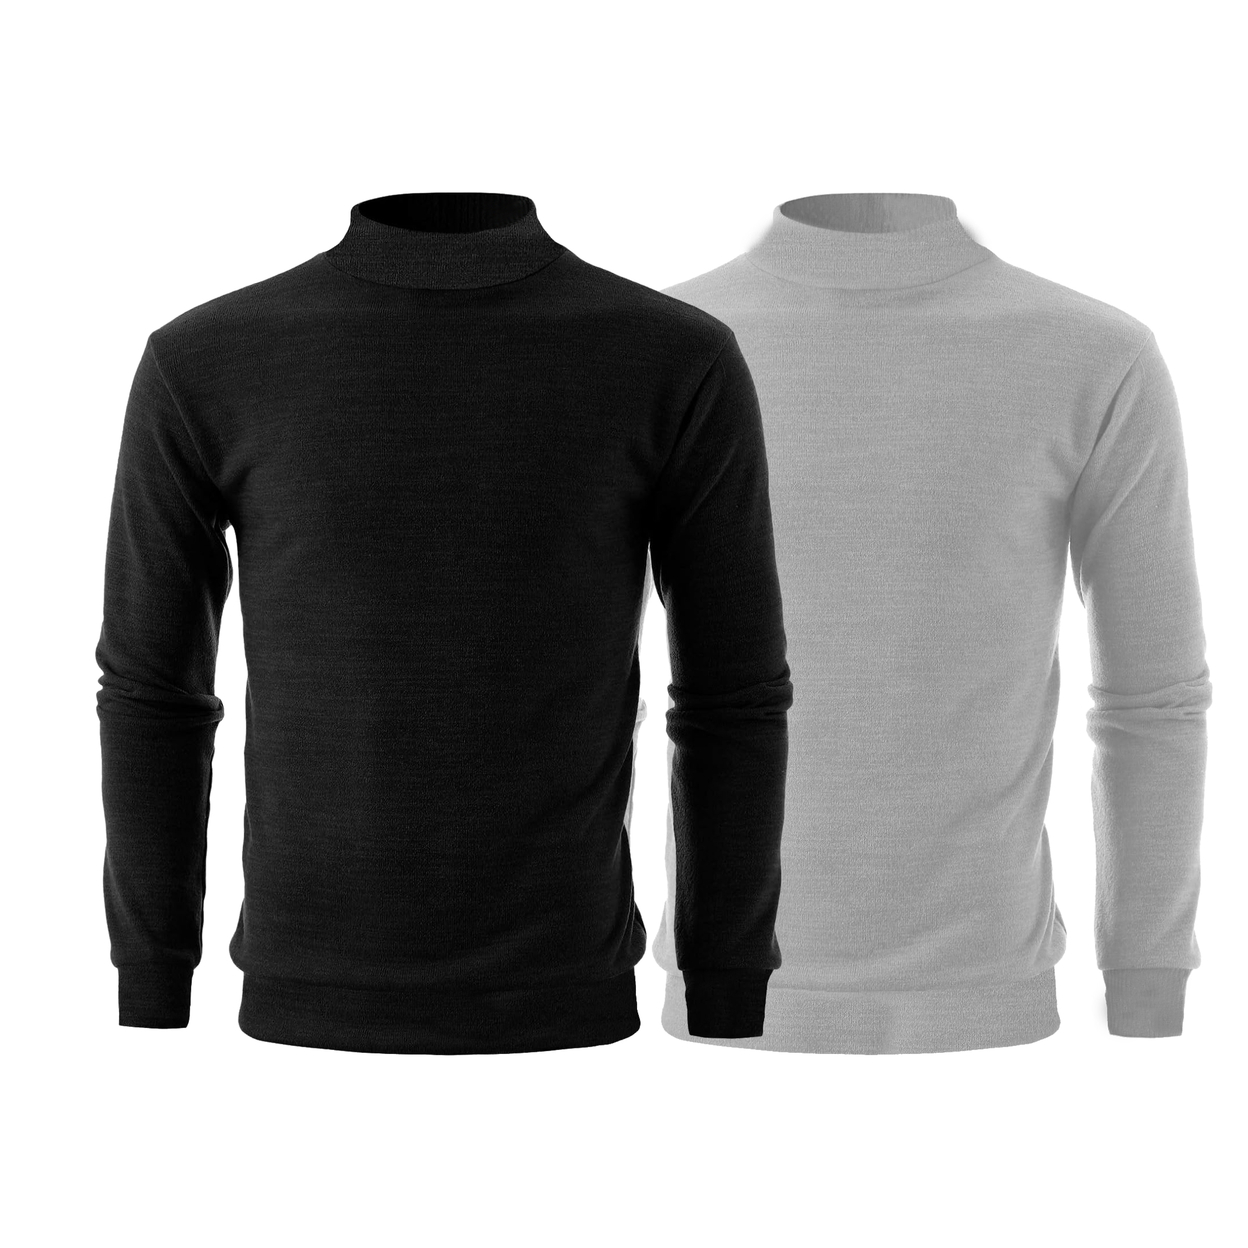 2-Pack: Men's Winter Warm Cozy Knit Slim Fit Mock Neck Sweater - Black & Charcoal, X-large